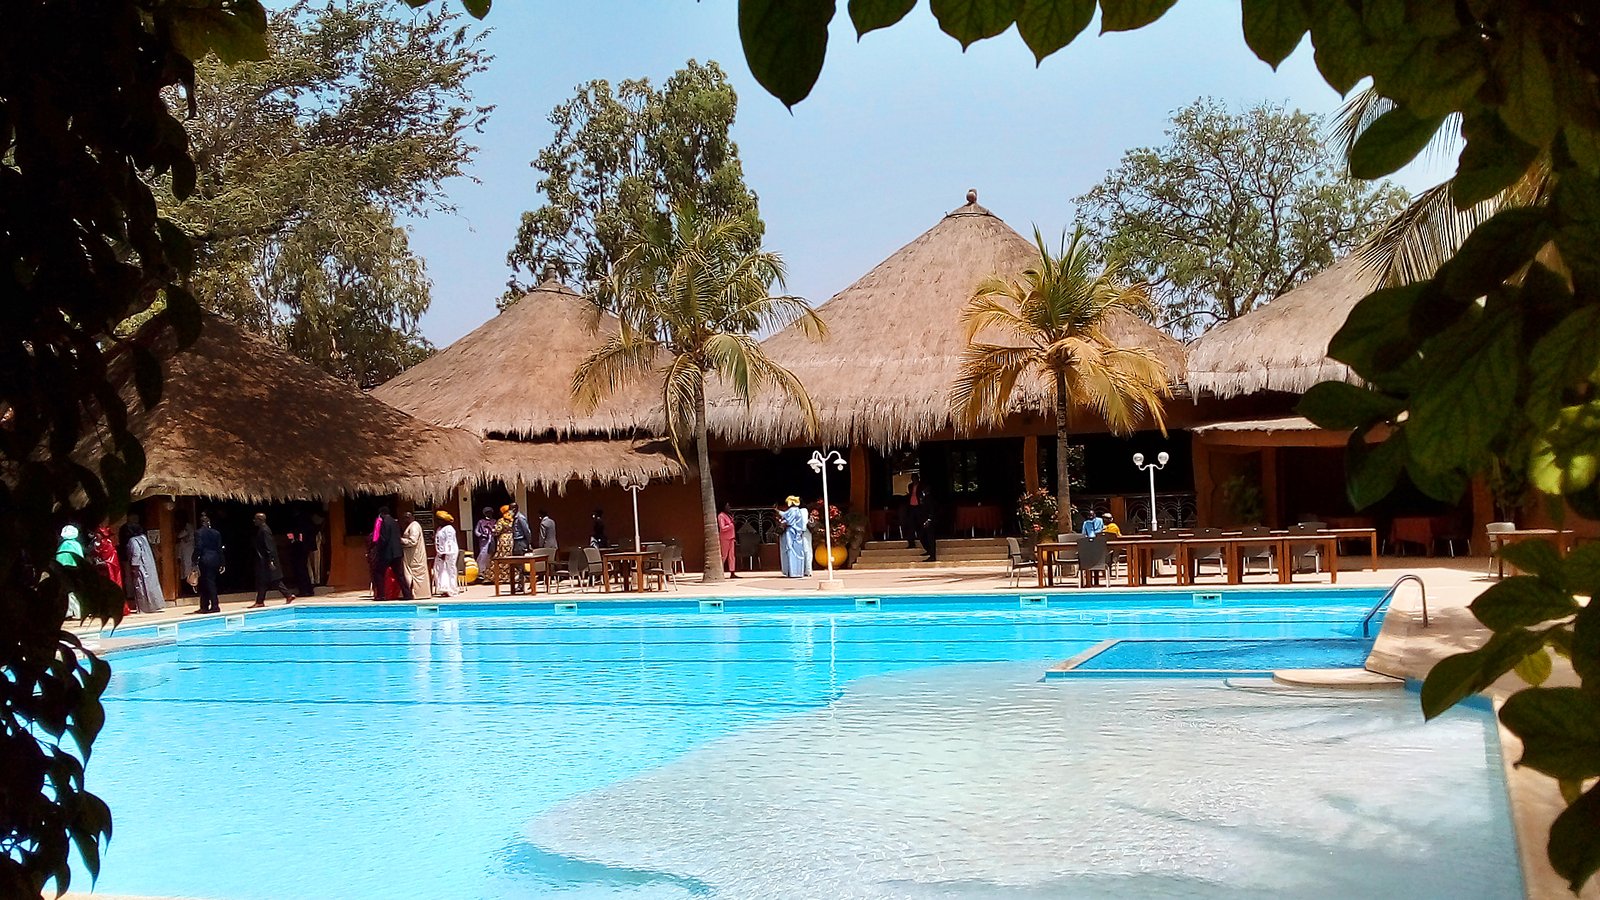 Hôtel Neptune Sénégal Saly.